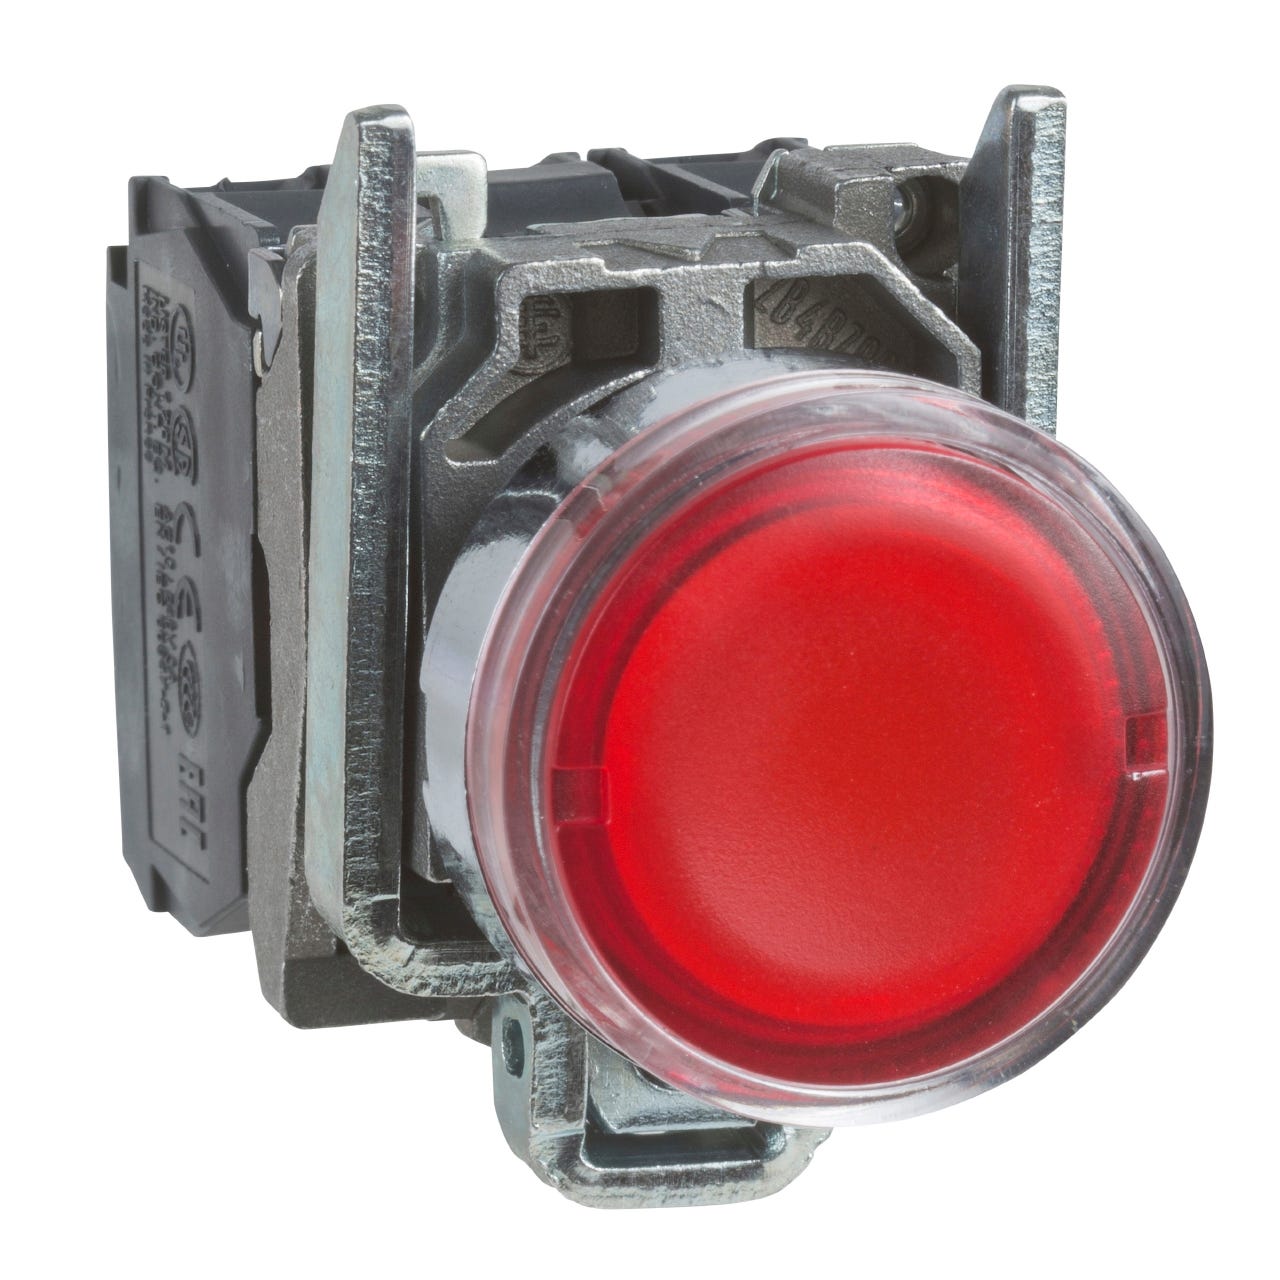 bouton poussoir lumineux - affleurant - 1no + 1nf - rouge - 230v - schneider xb4bw34m5 0